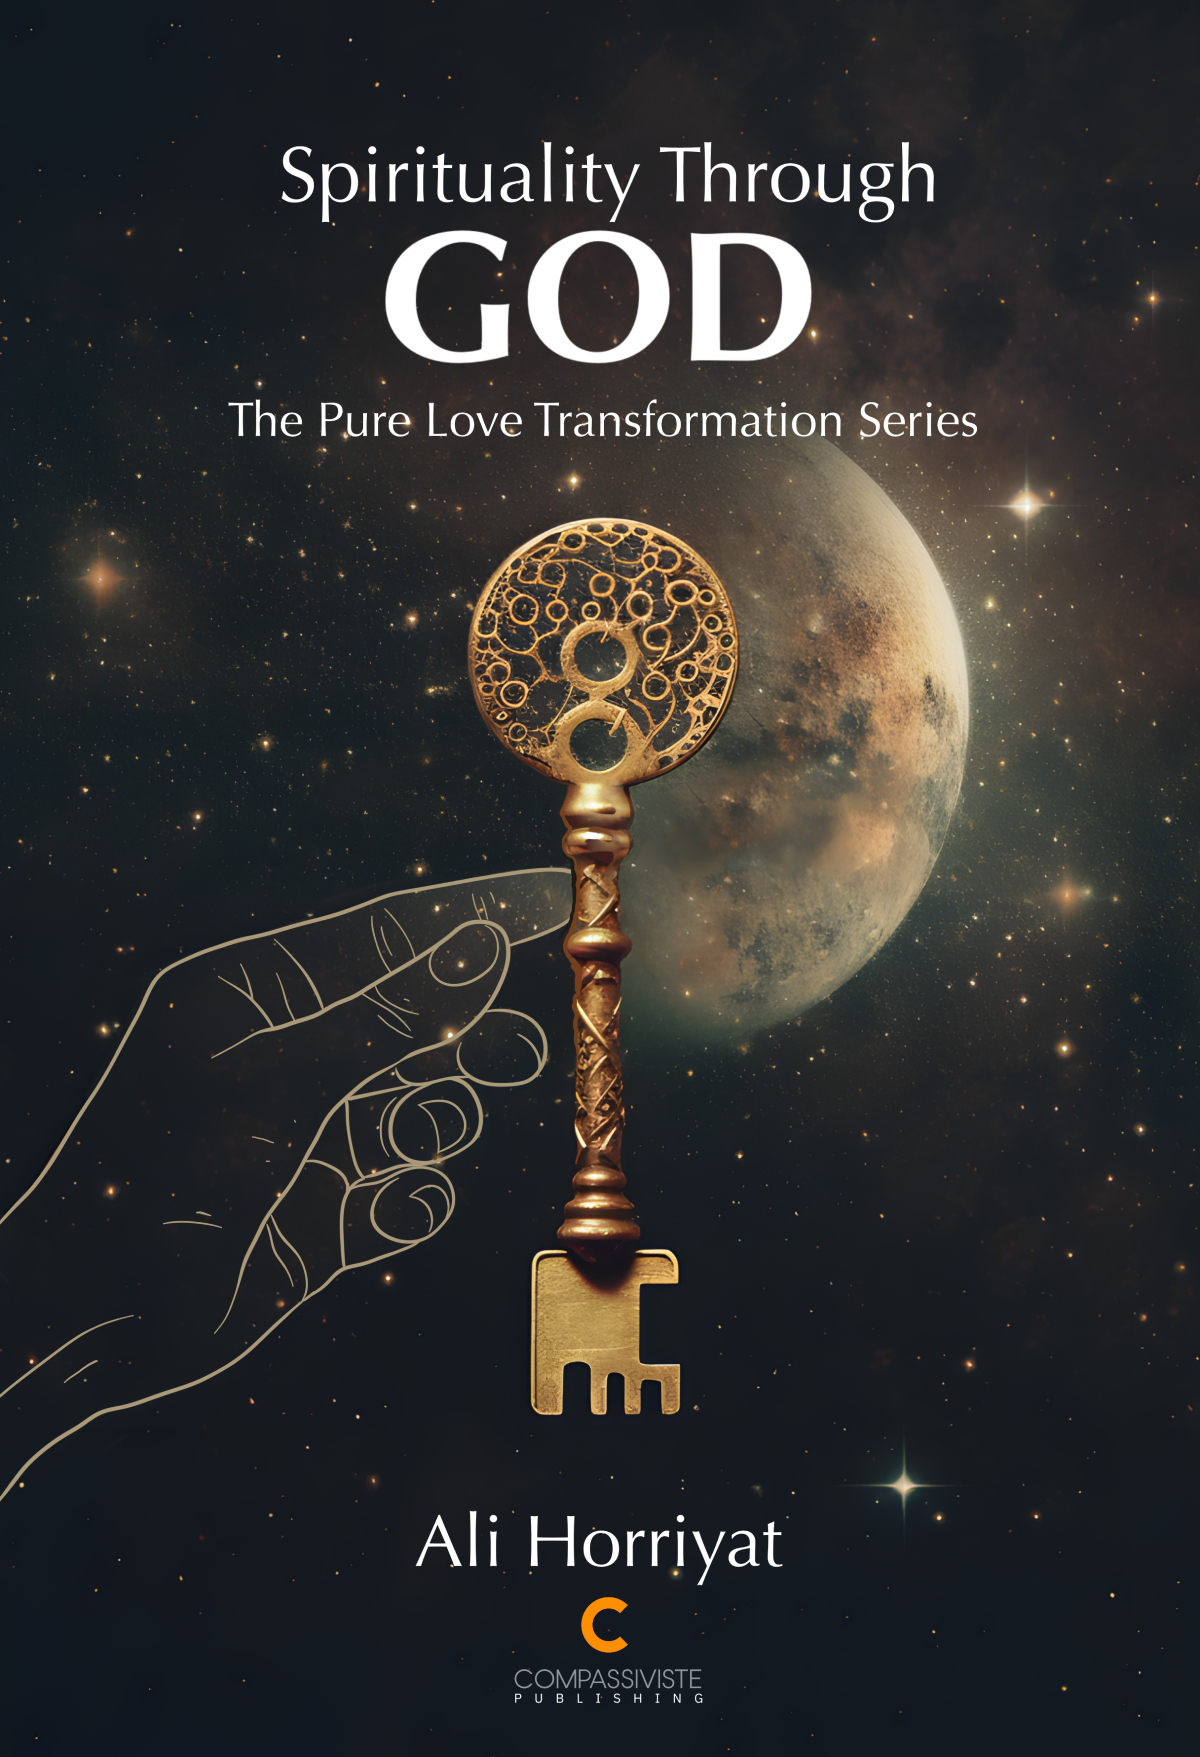 Book cover of Spirituality Through God by Ali Horriyat